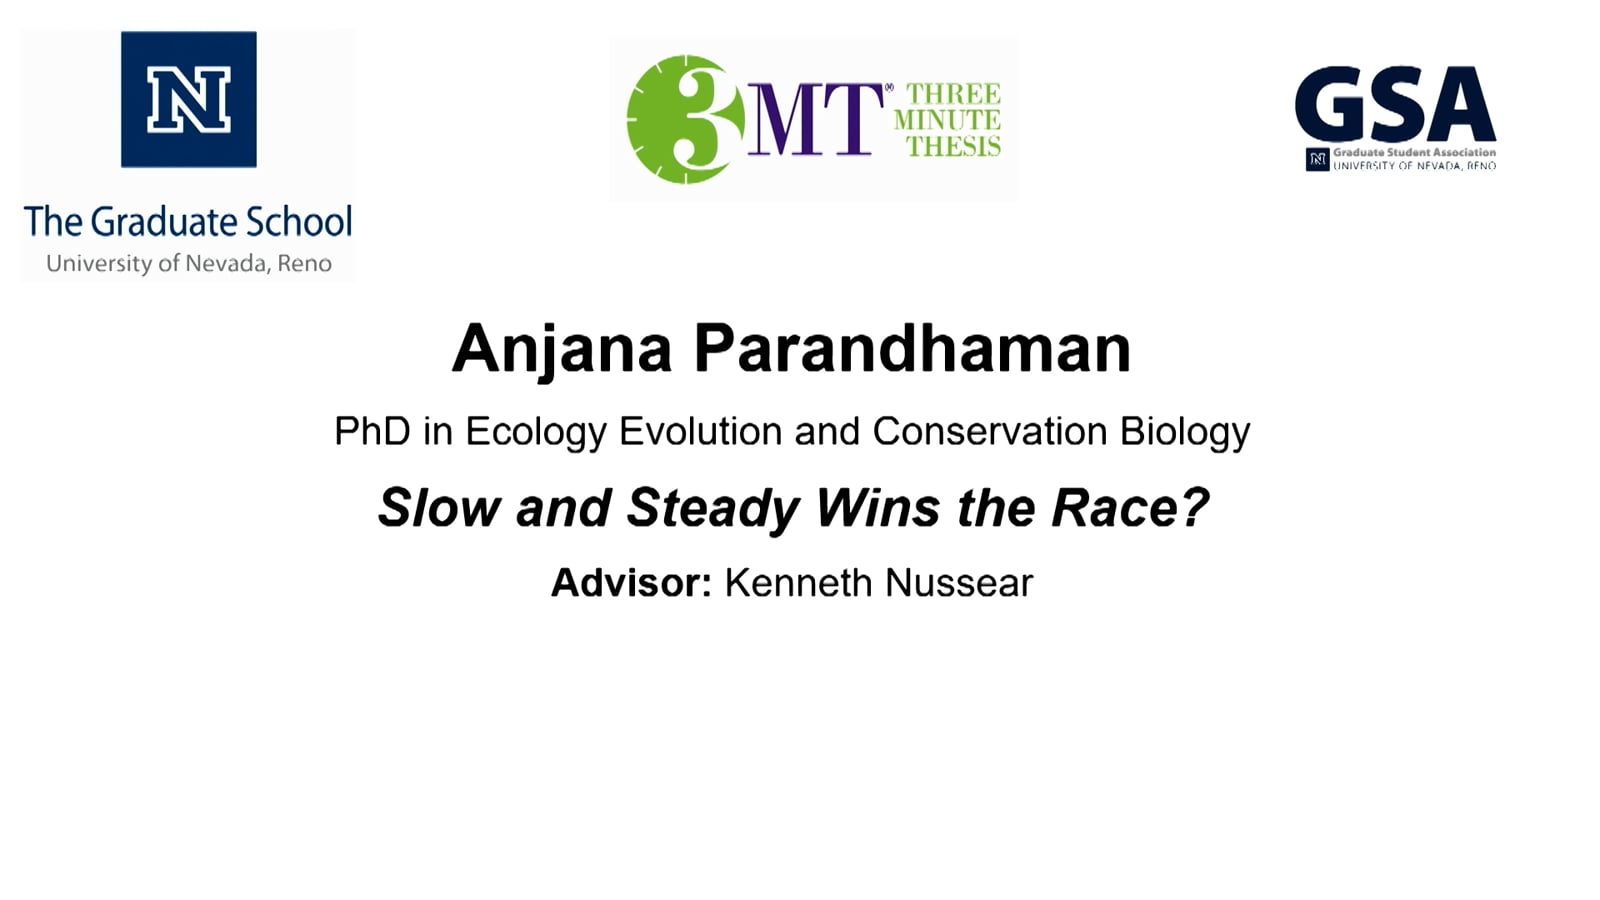 Thumbnail of Anjana Parandhaman's slide